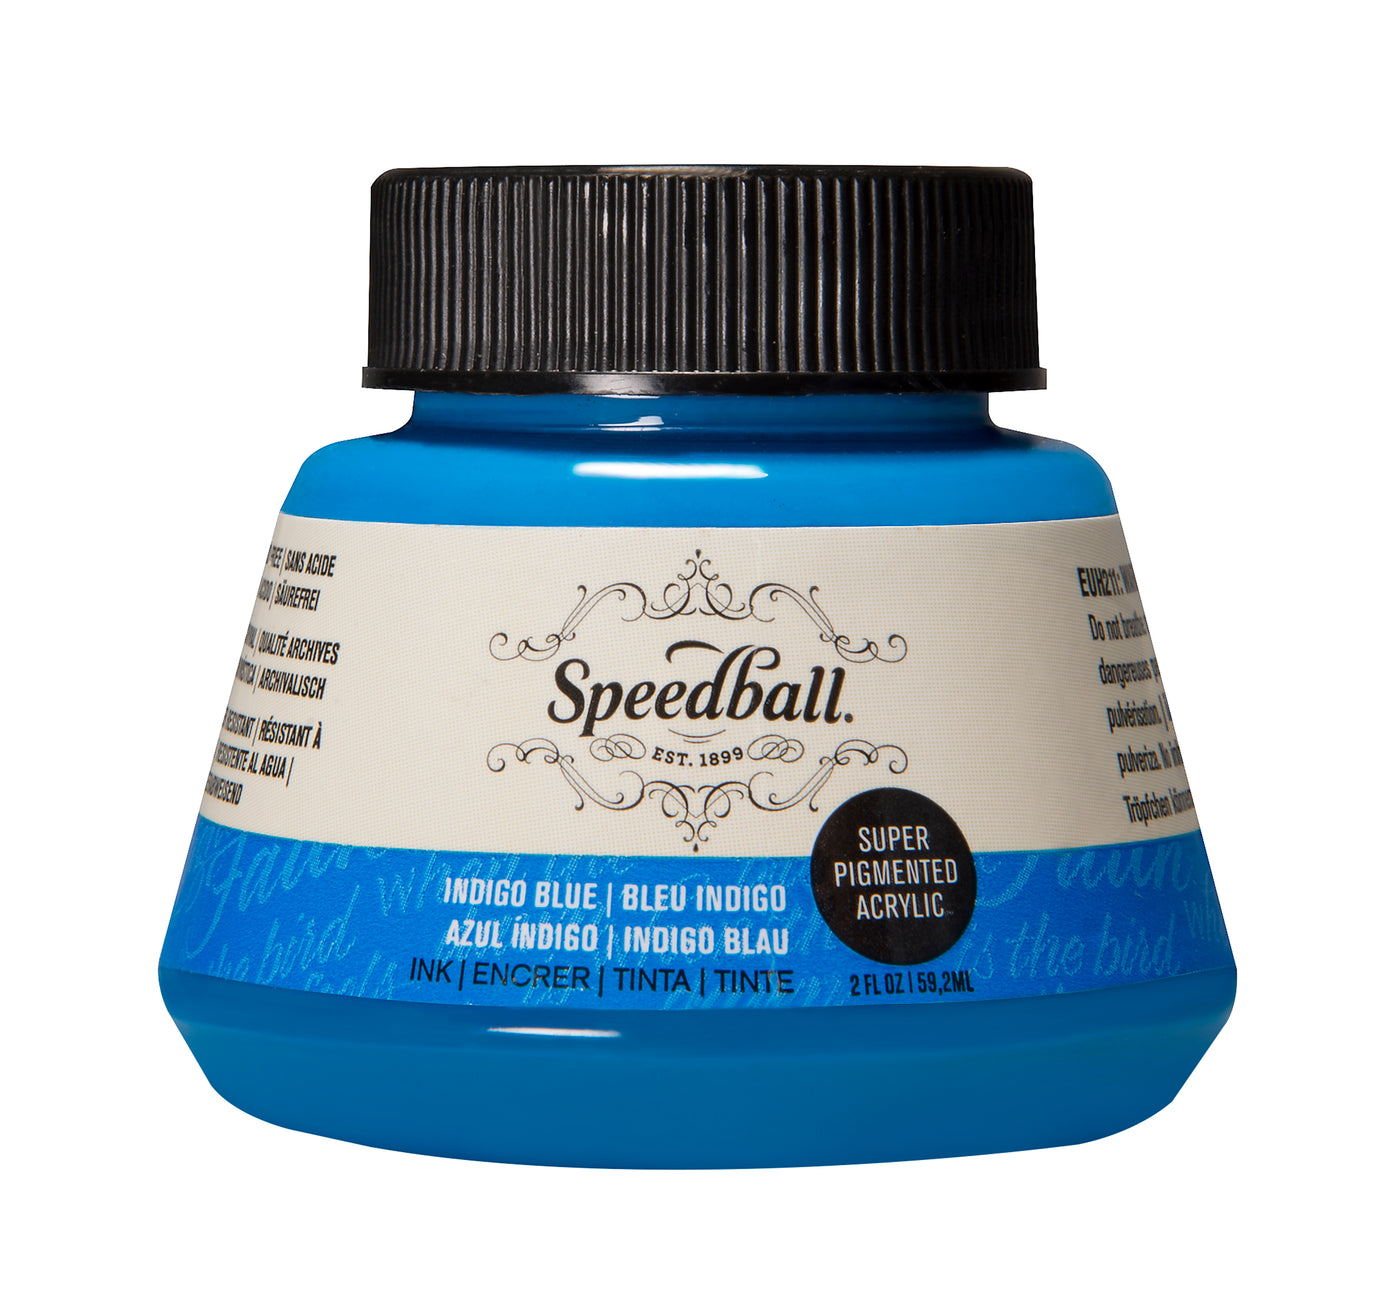 Speedball Super Pigmented Acrylic Indigo Blue - 2 oz Ink